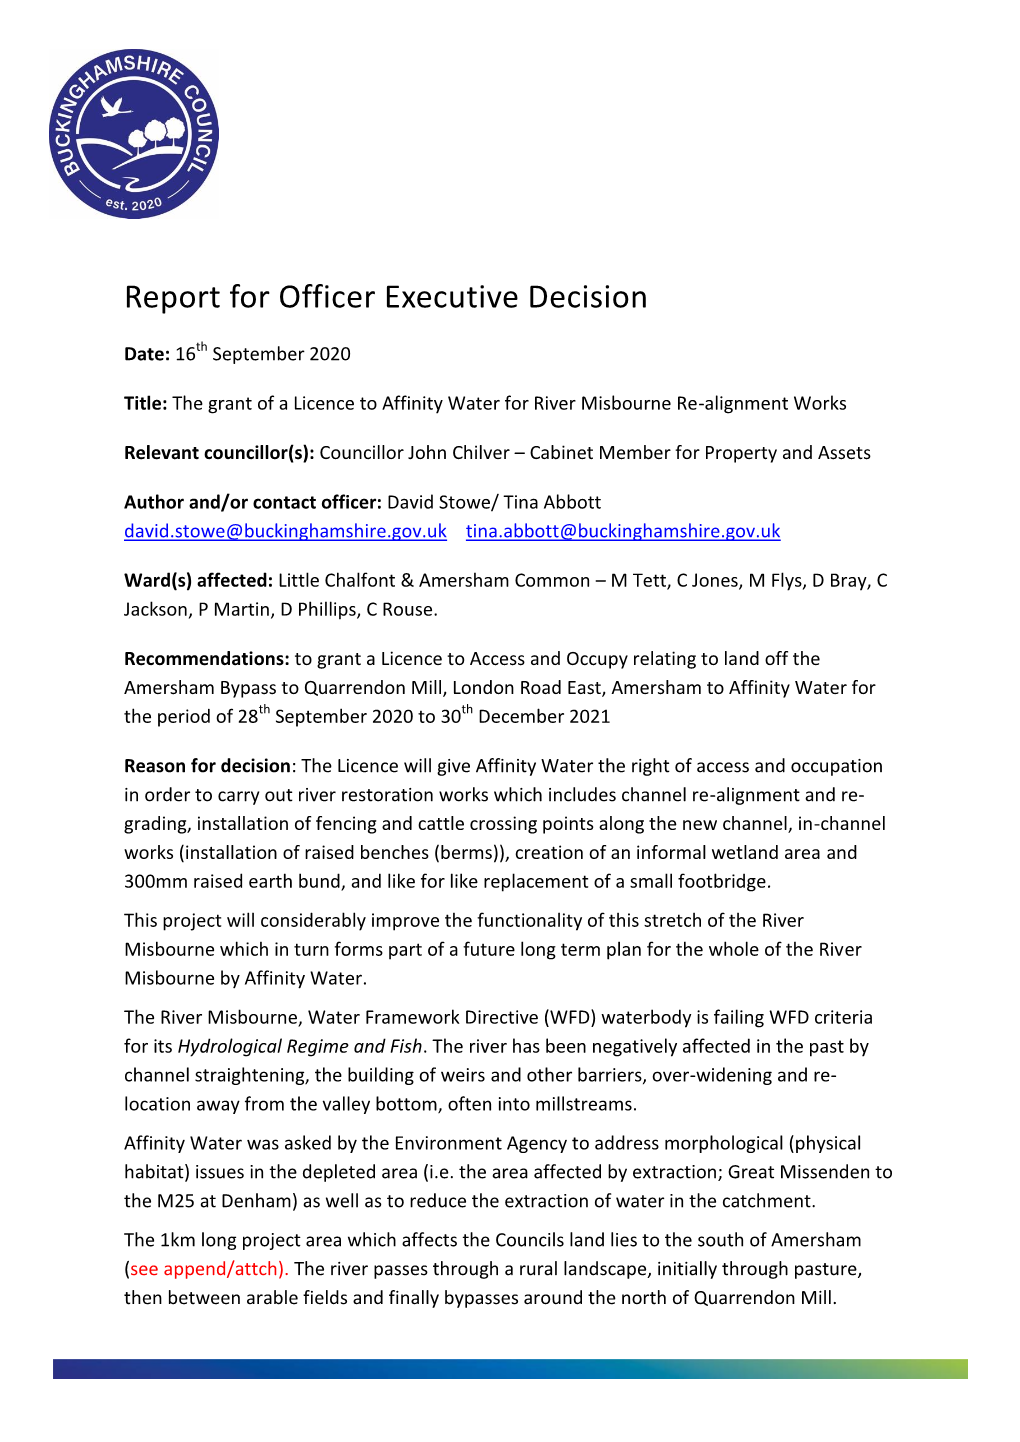 Officer Executive Decision River Misbourne